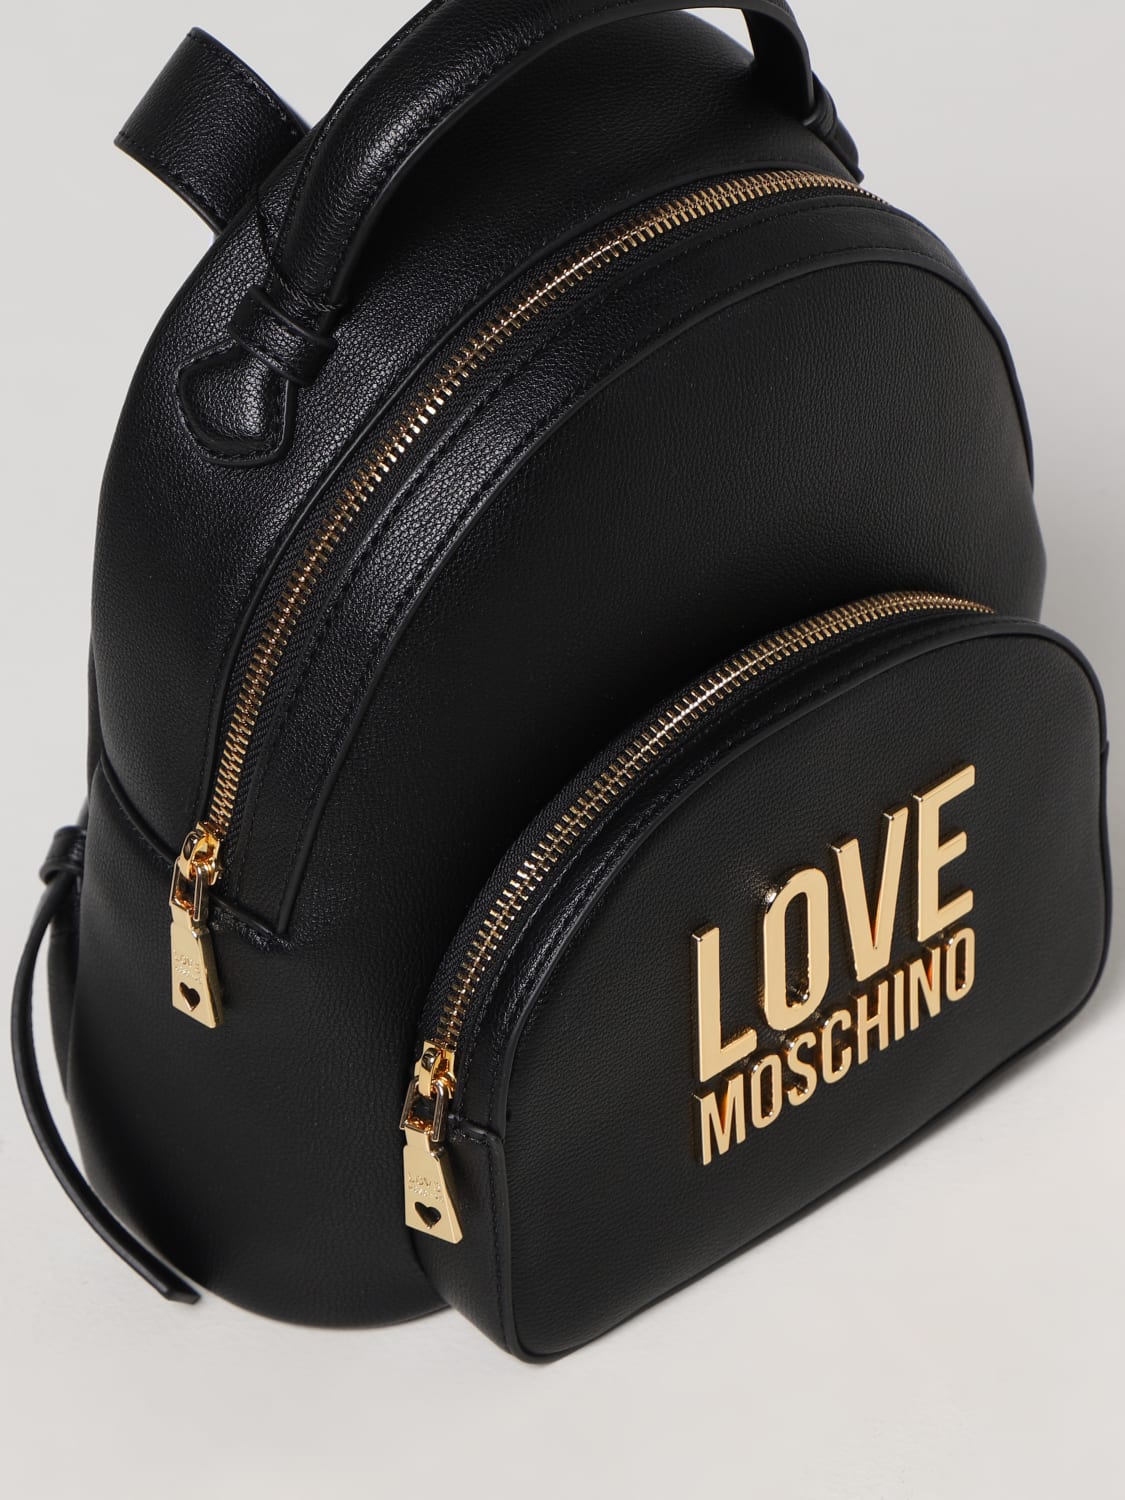 LOVE MOSCHINO: Mochila para mujer, | Mochila Love Moschino en línea en GIGLIO.COM